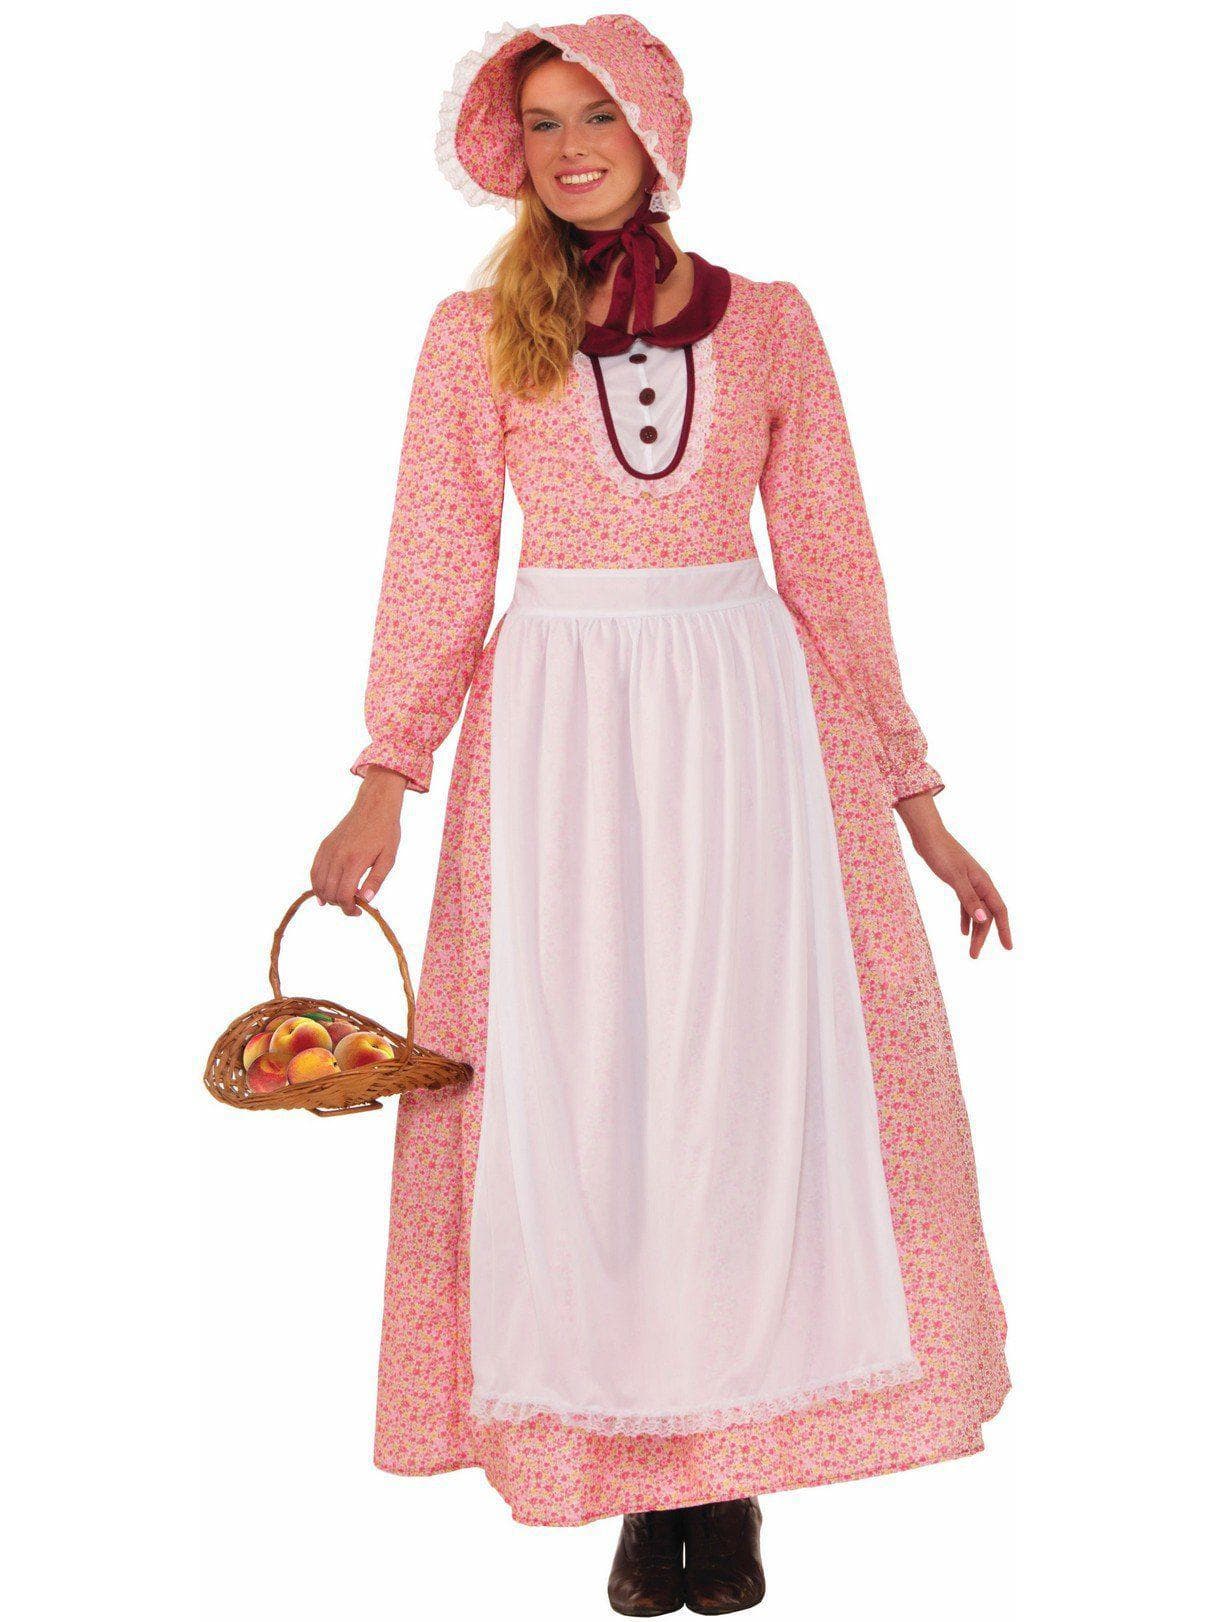 Adult Pioneer Woman Costume - costumes.com